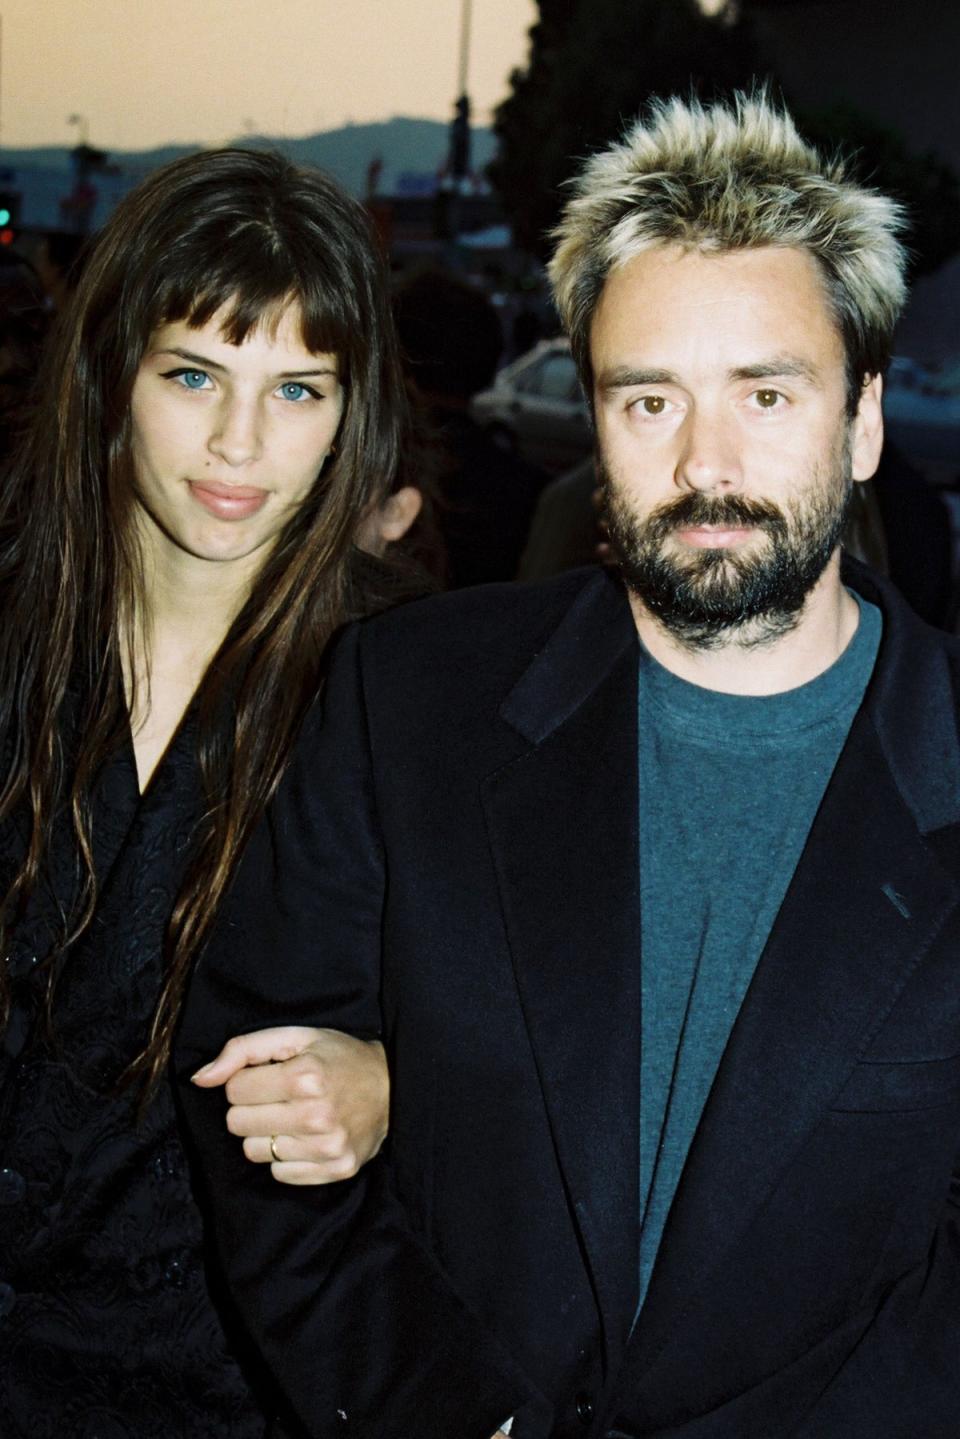 Maïwenn and her former husband Luc Besson in 1995 (Shutterstock)